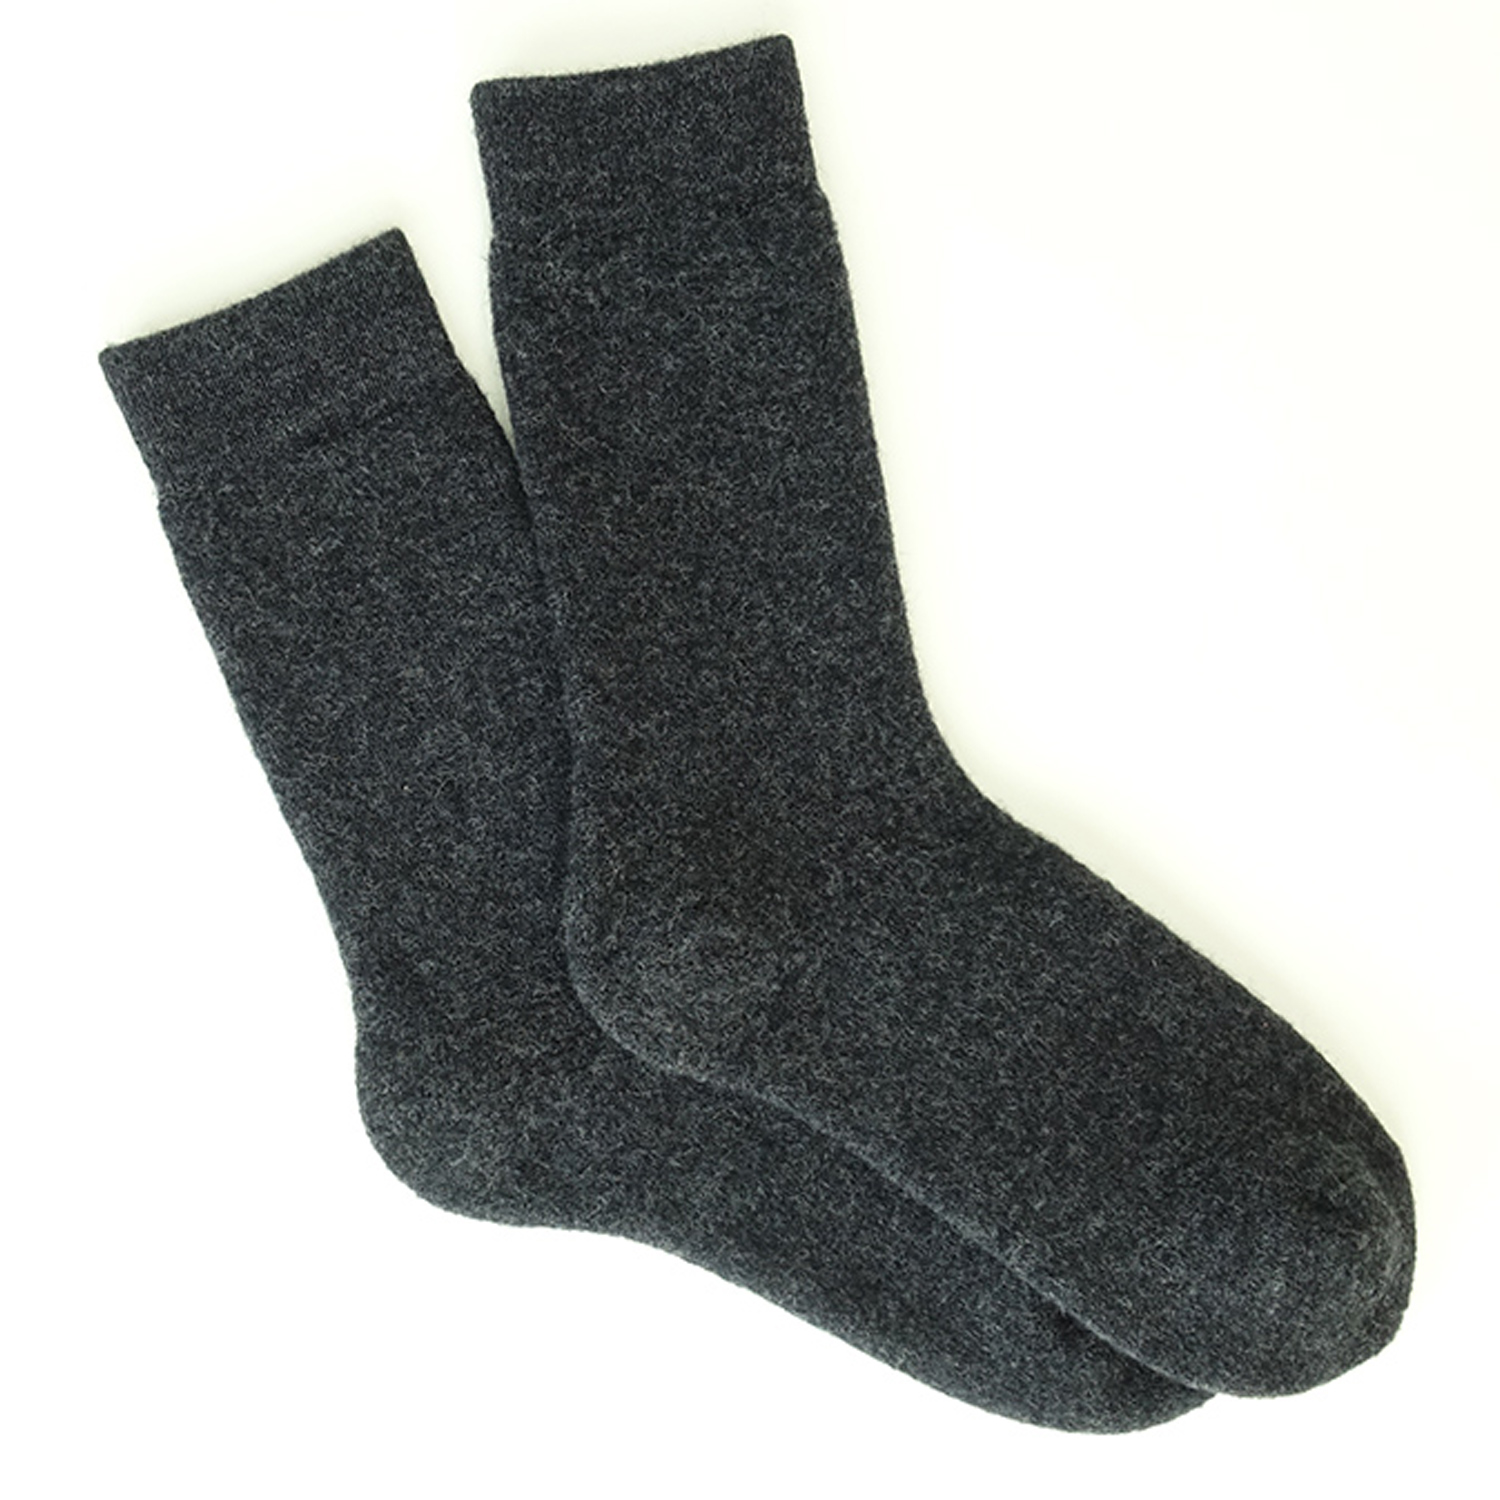 Enluva Termico 2 Overlay Socken